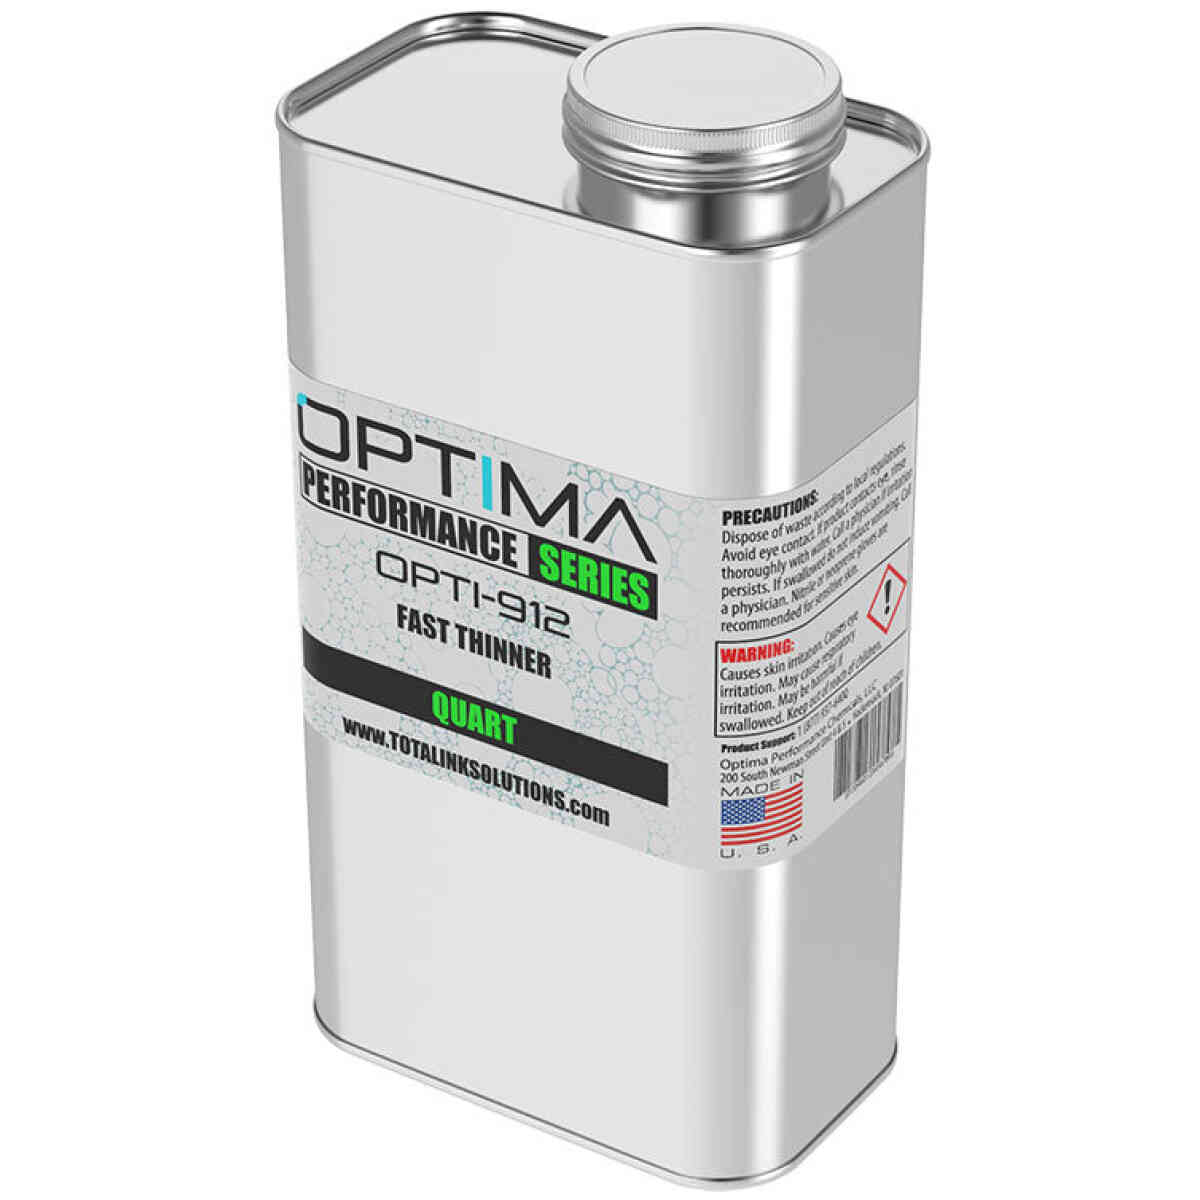 Opti-912 Fast Thinner OPTIMA PERFORMANCE SERIES®